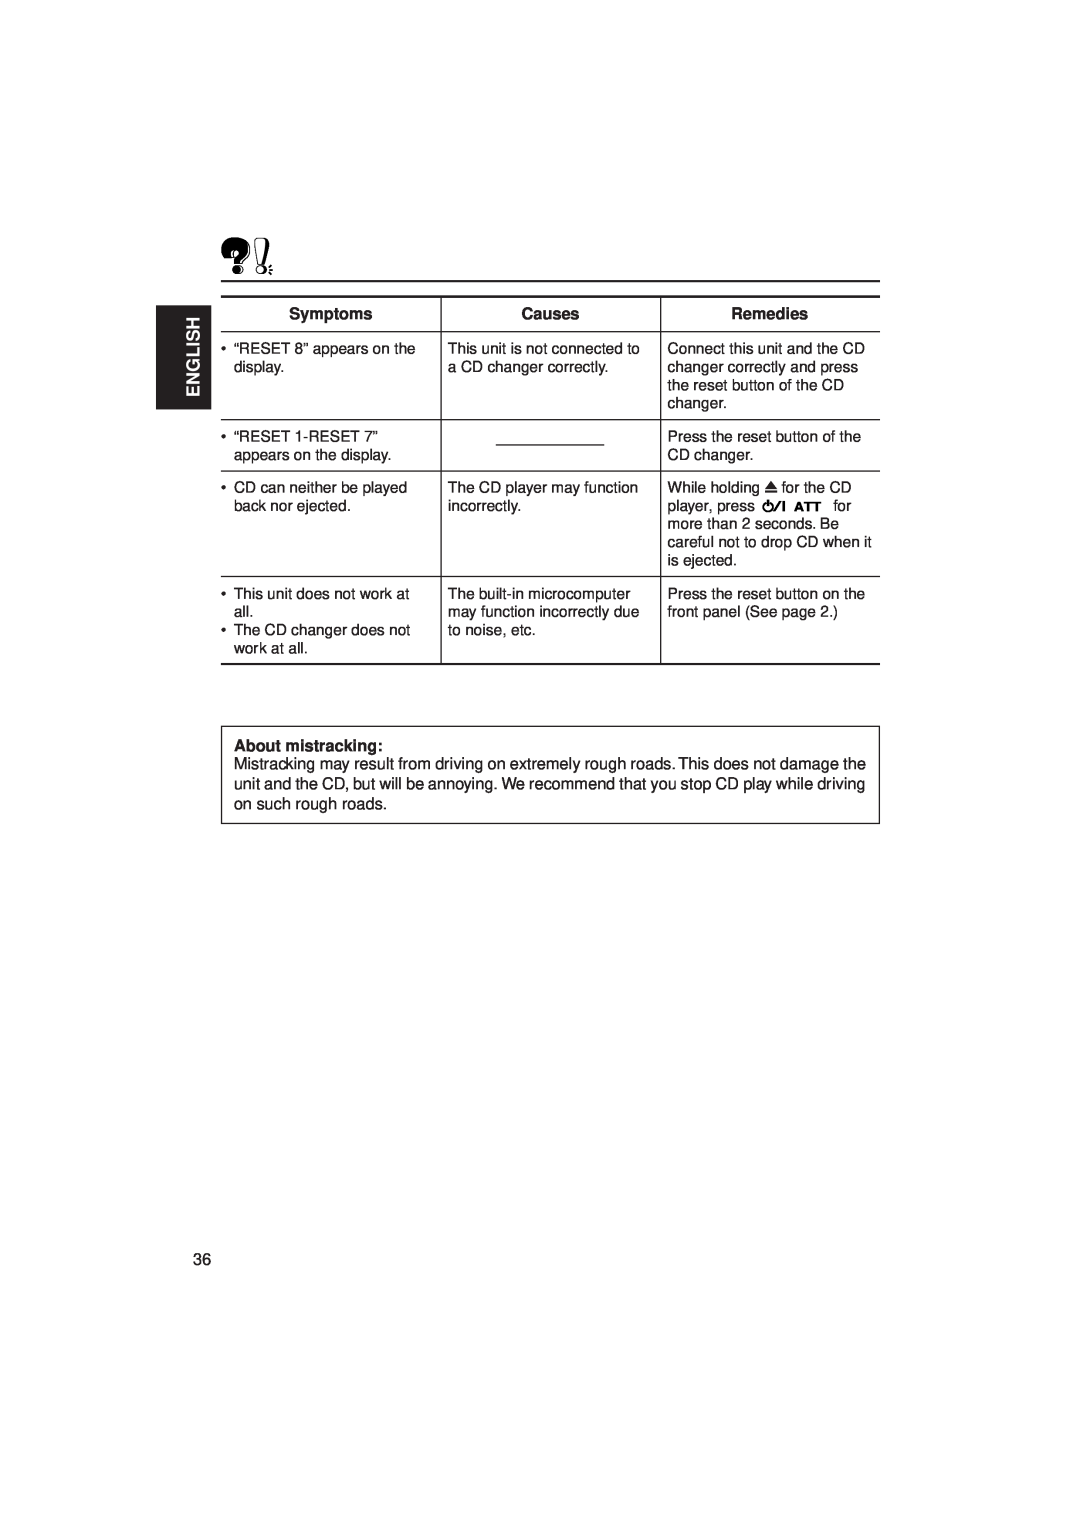 JVC KW-XC770 manual English, Symptoms, Causes, Remedies, About mistracking 